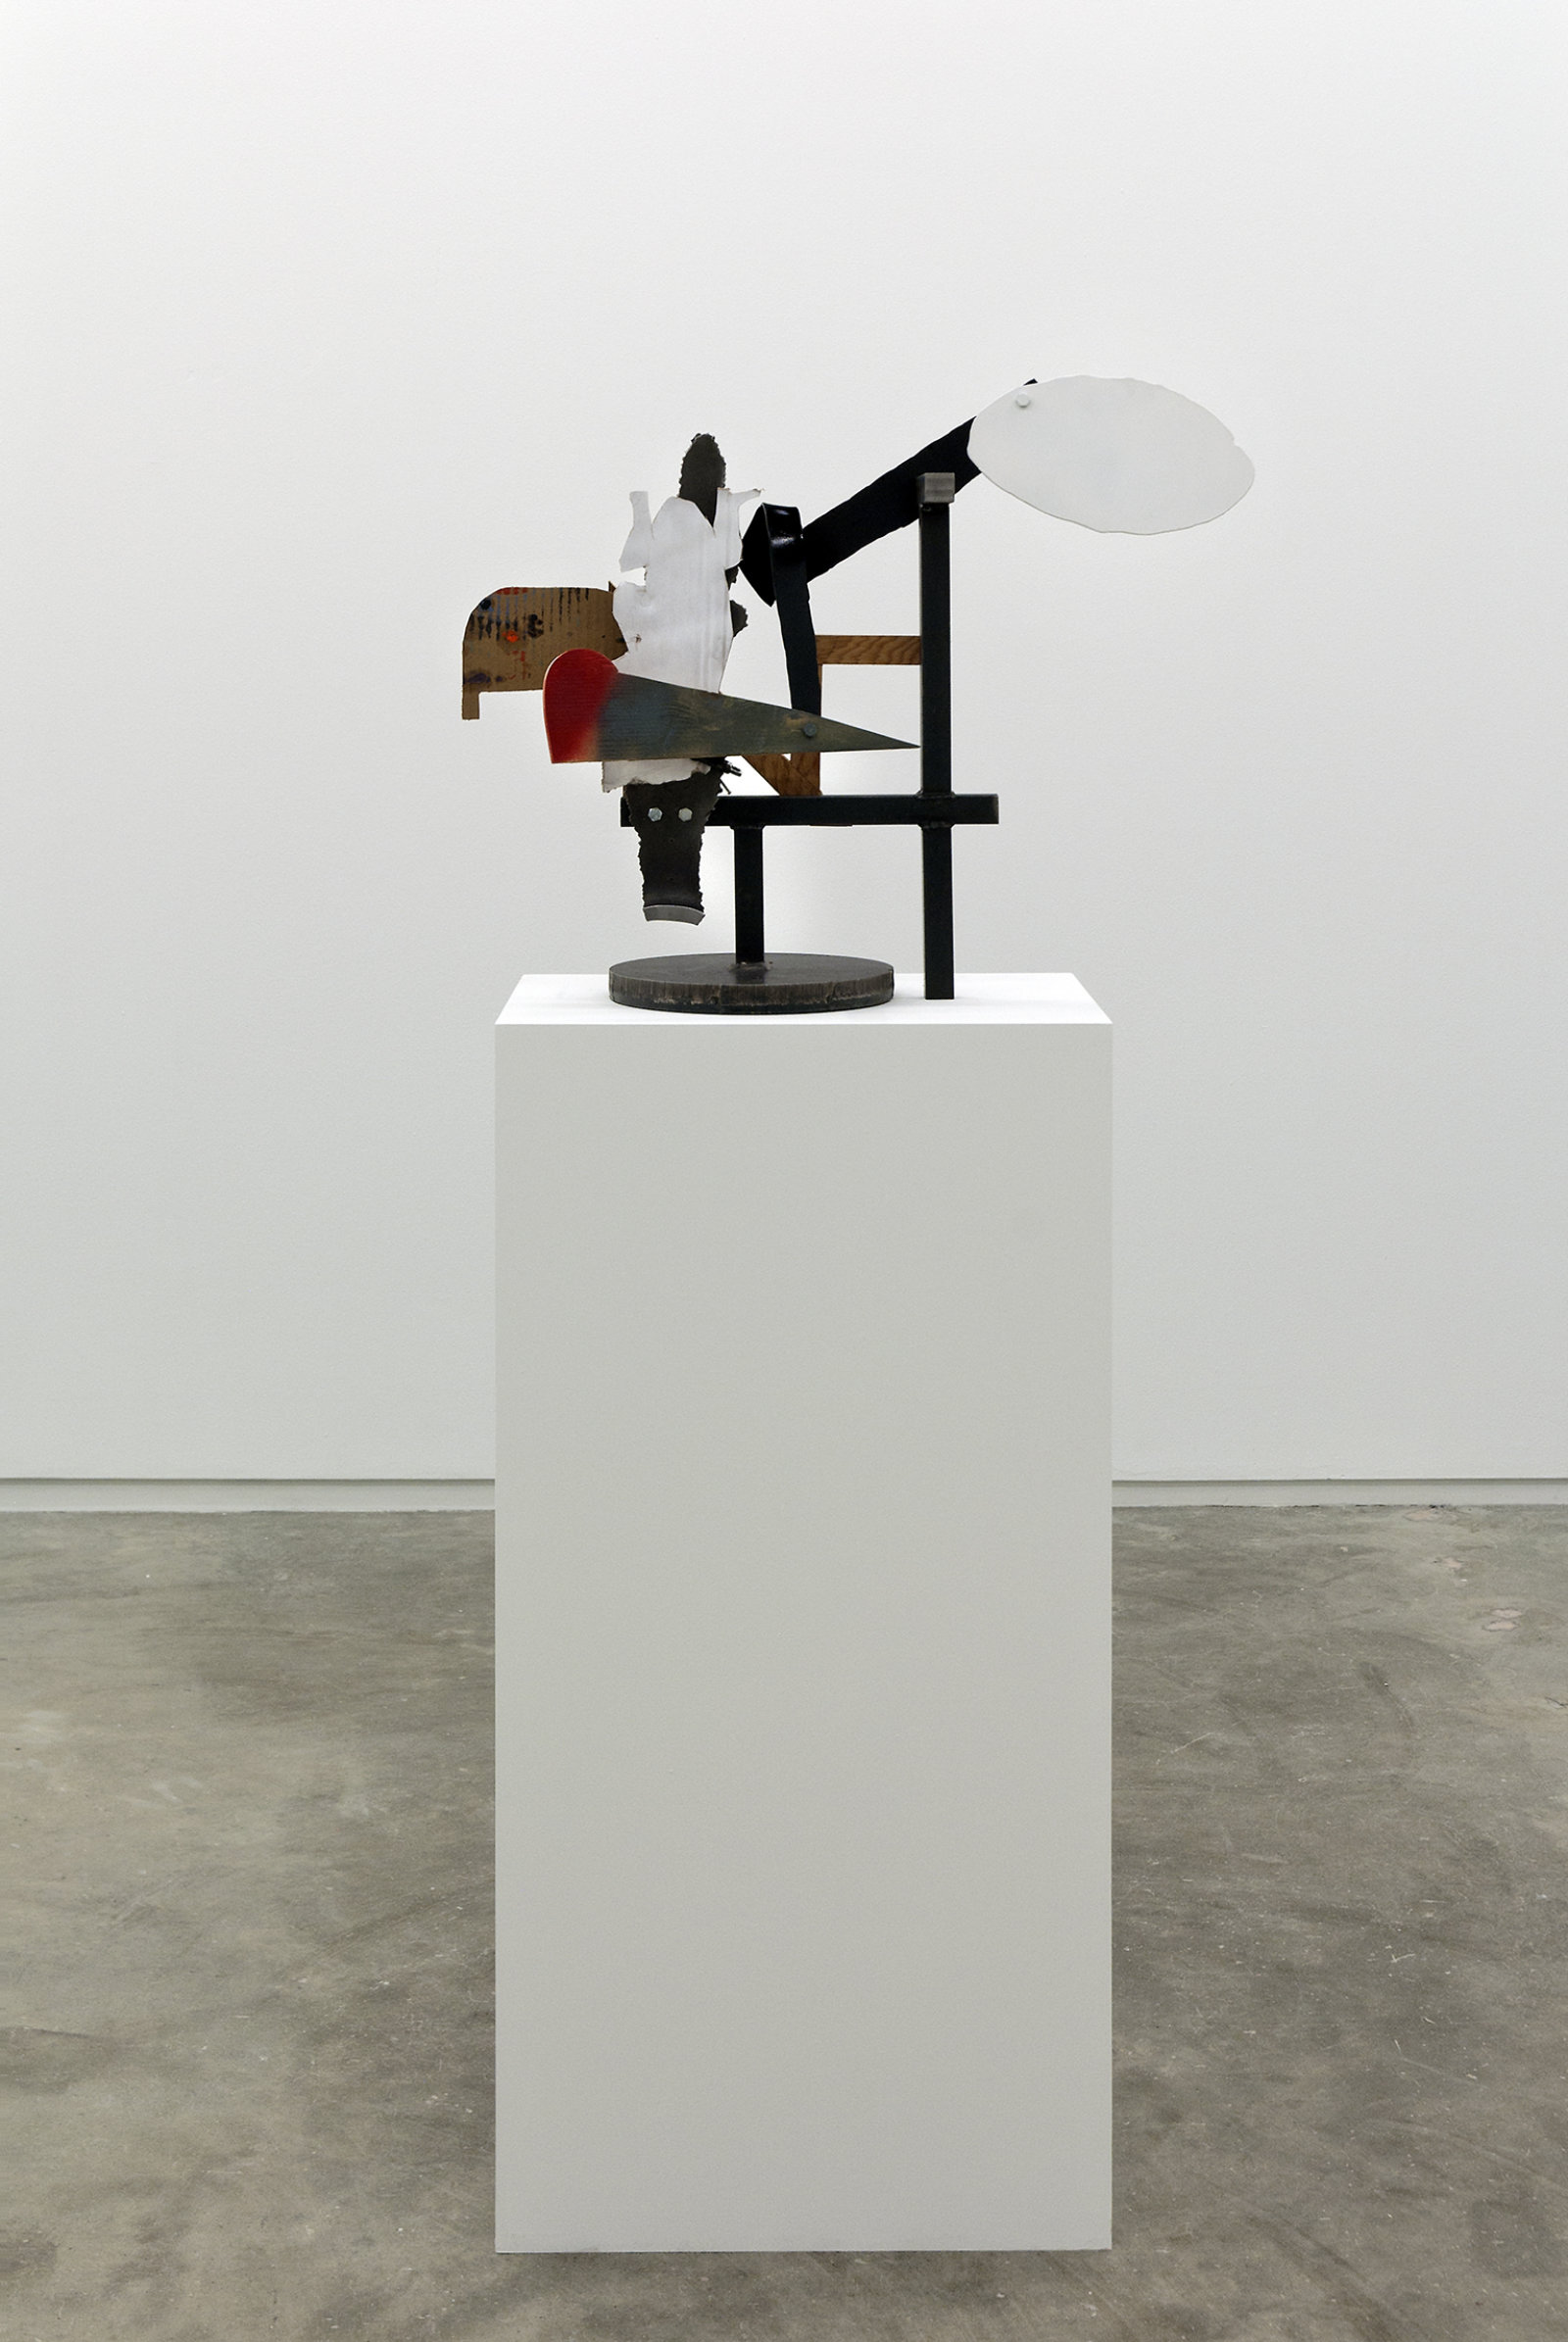 Damian Moppett, Untitled, 2010, steel, wood, cardboard, clamps, 22 x 29 x 8 in. (55 x 72 x 20 cm)